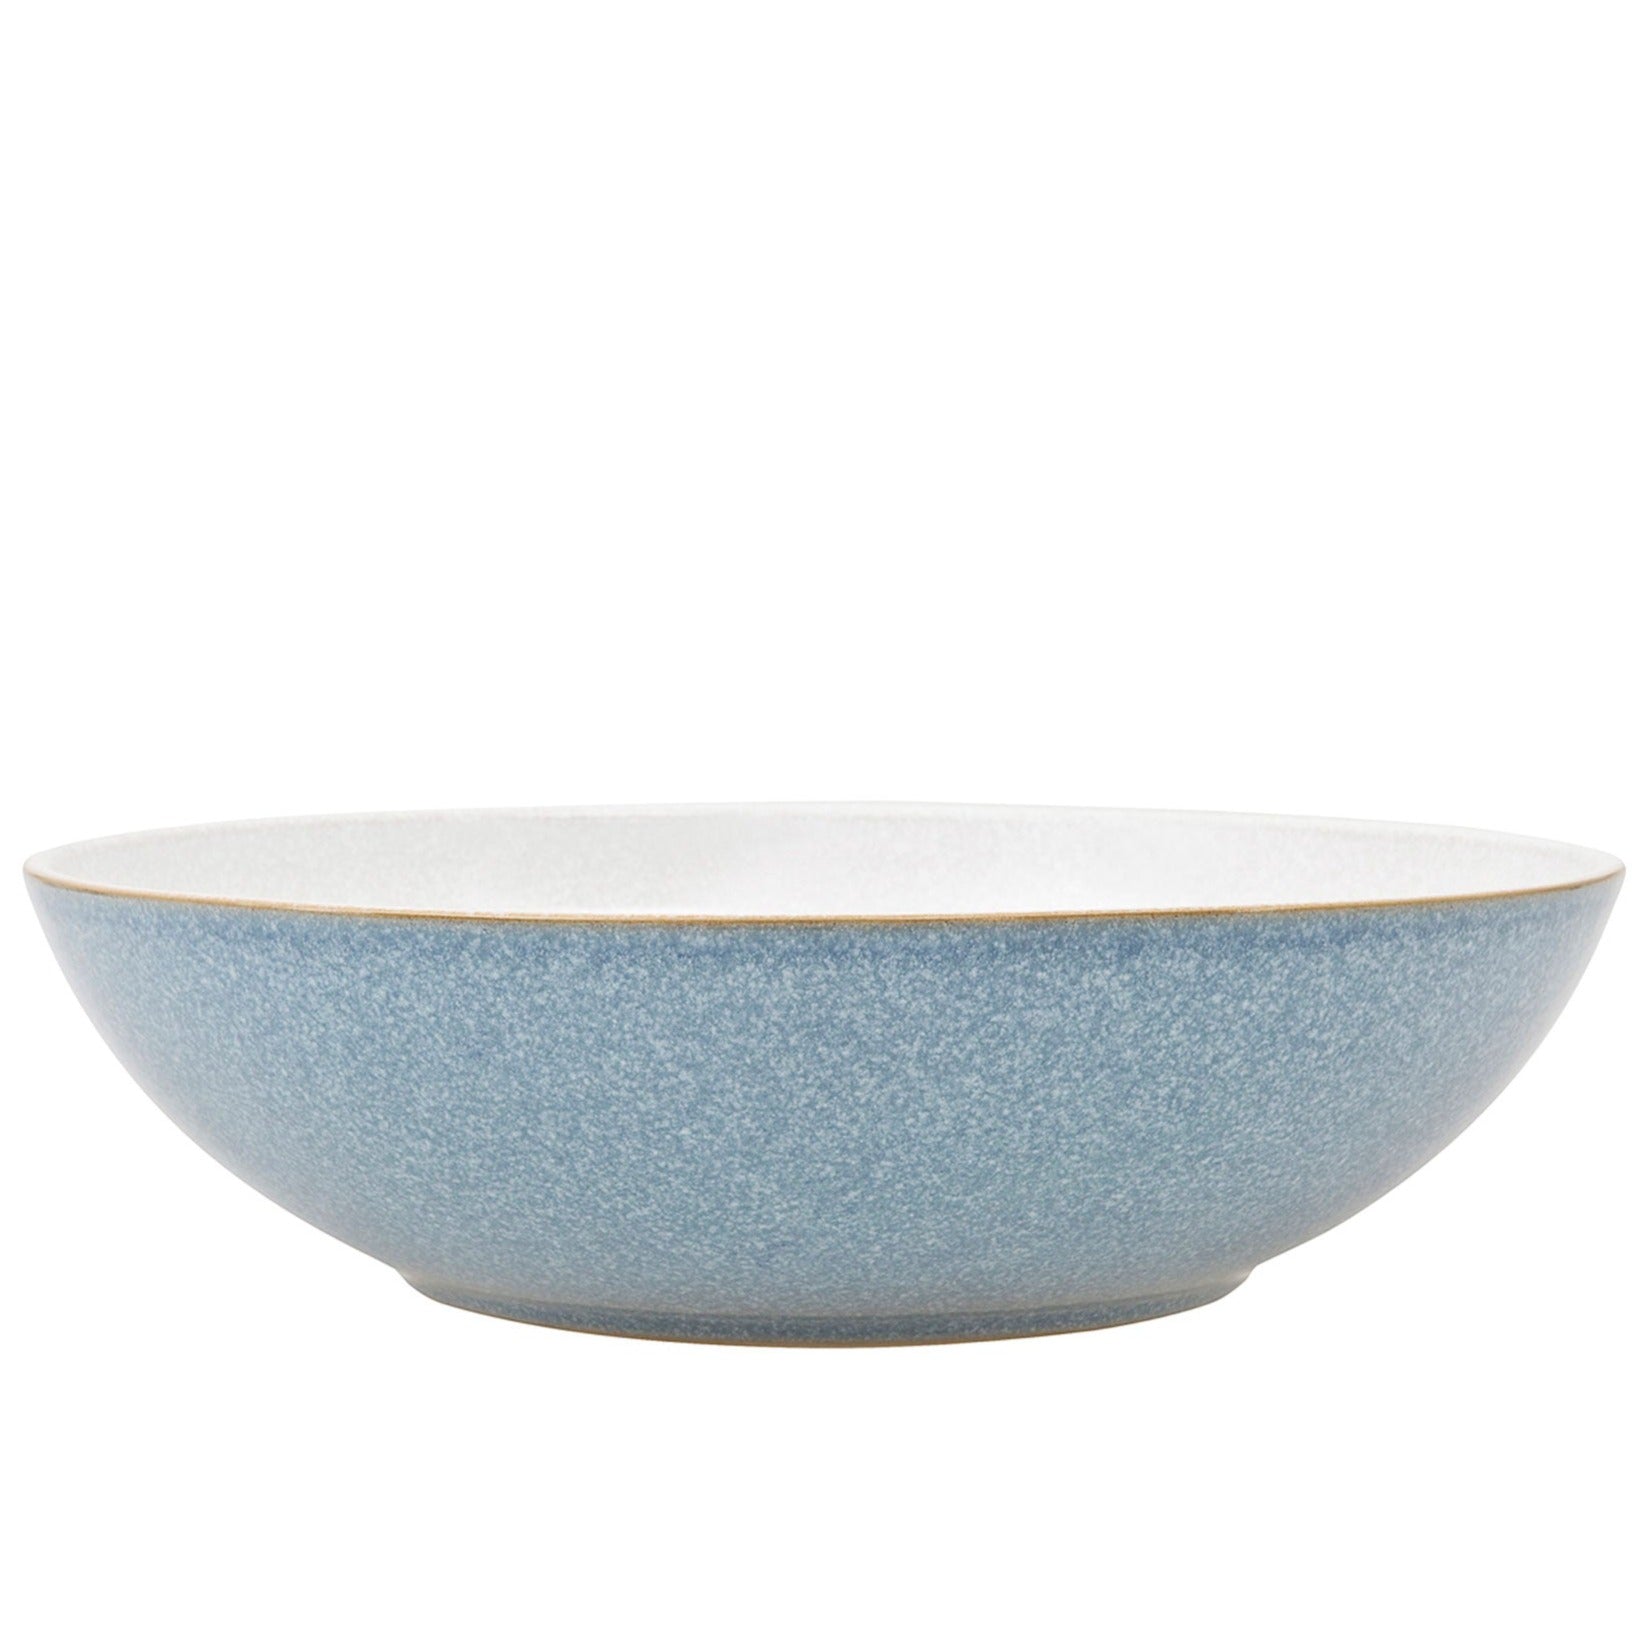 Denby Elements Blue Serving Bowl